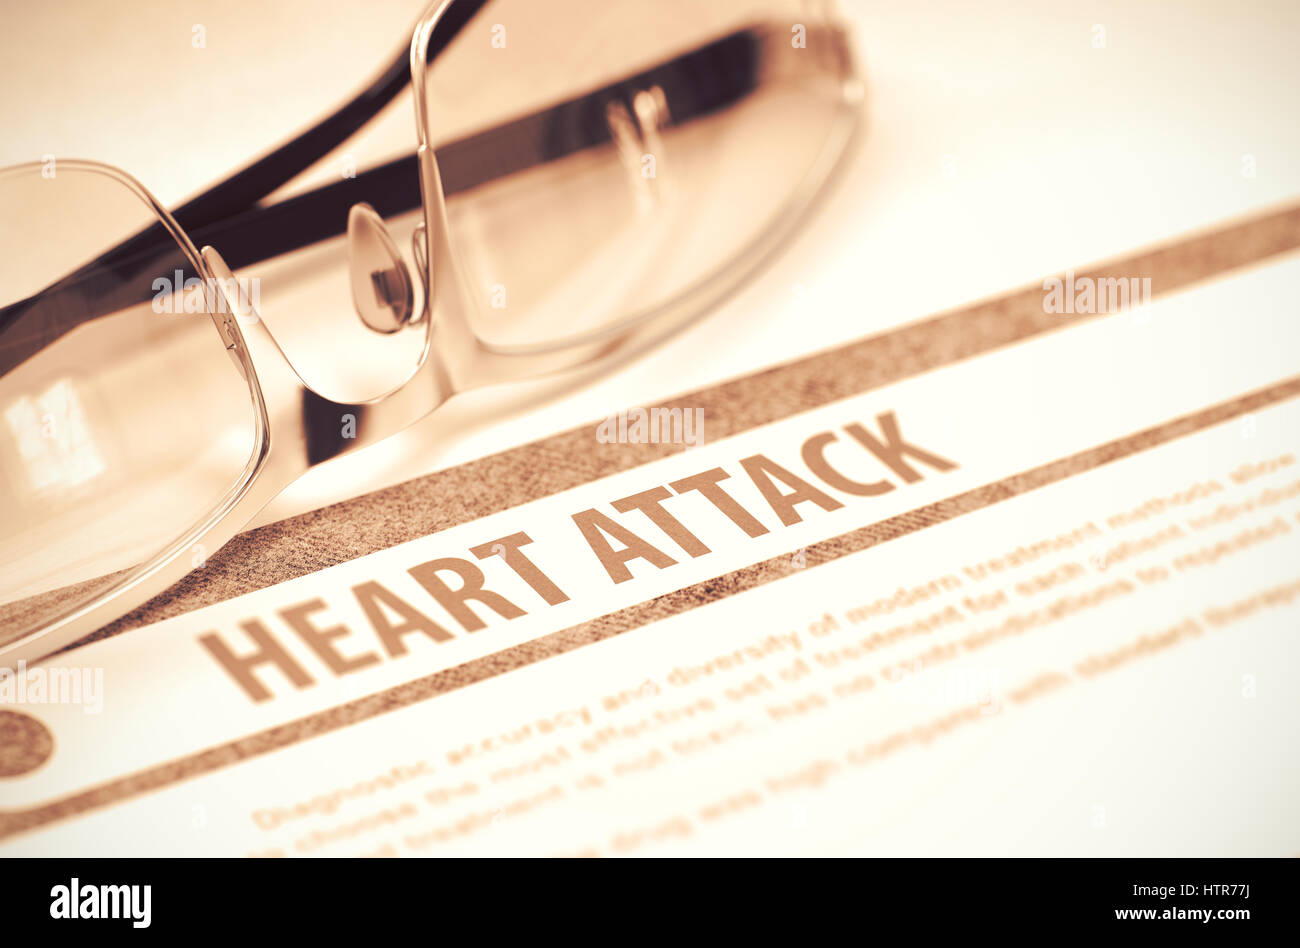 Diagnosis - Heart Attack. Medical Concept. 3D Illustration. Stock Photo